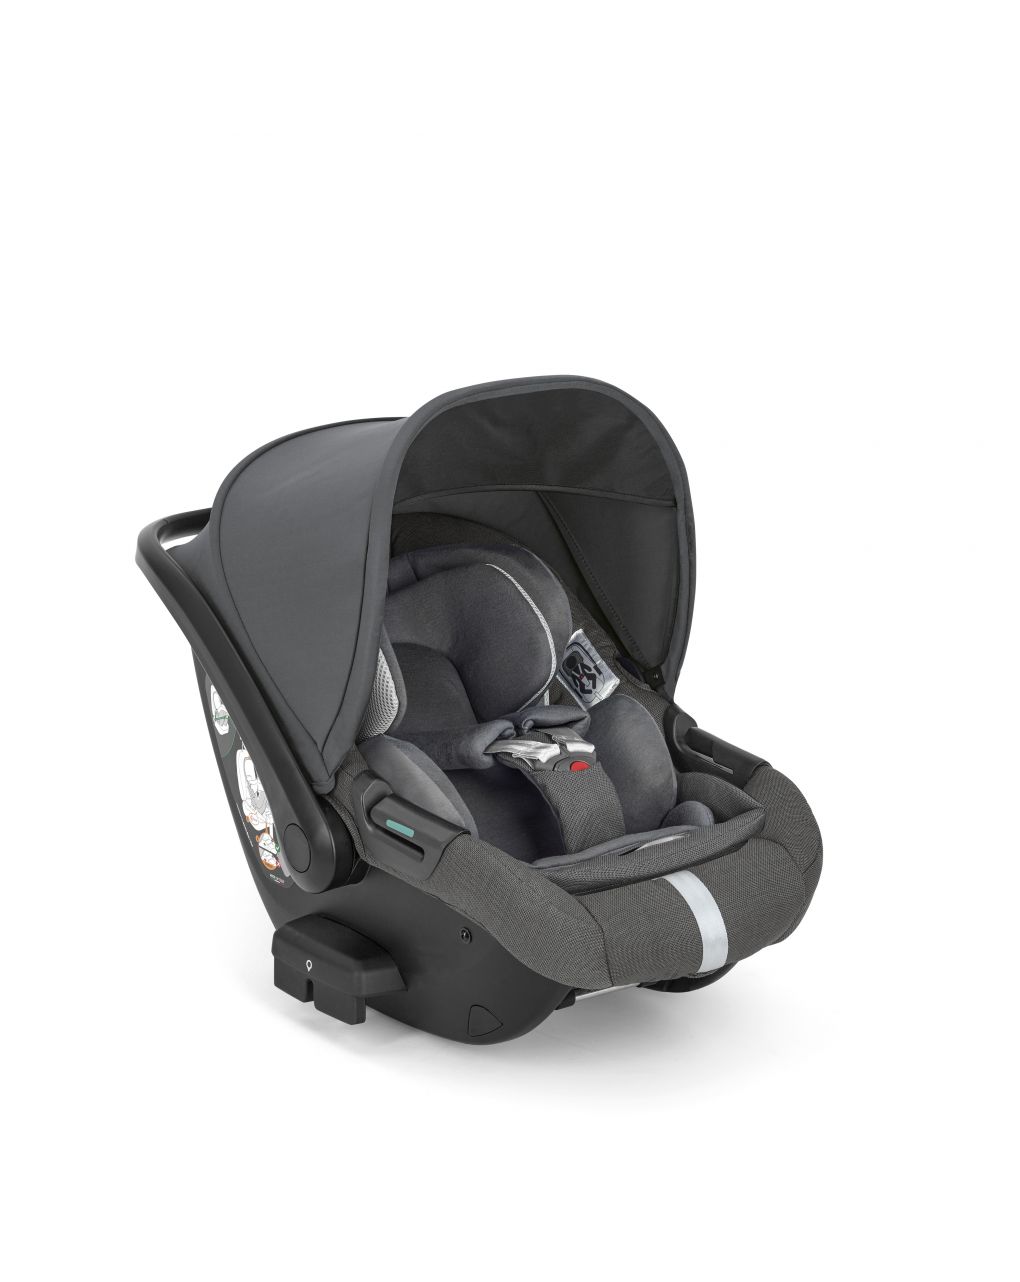 Aptica system quattro cor velvet grey com cadeira auto darwin infant recline + chassis palladio - inglesina - Inglesina